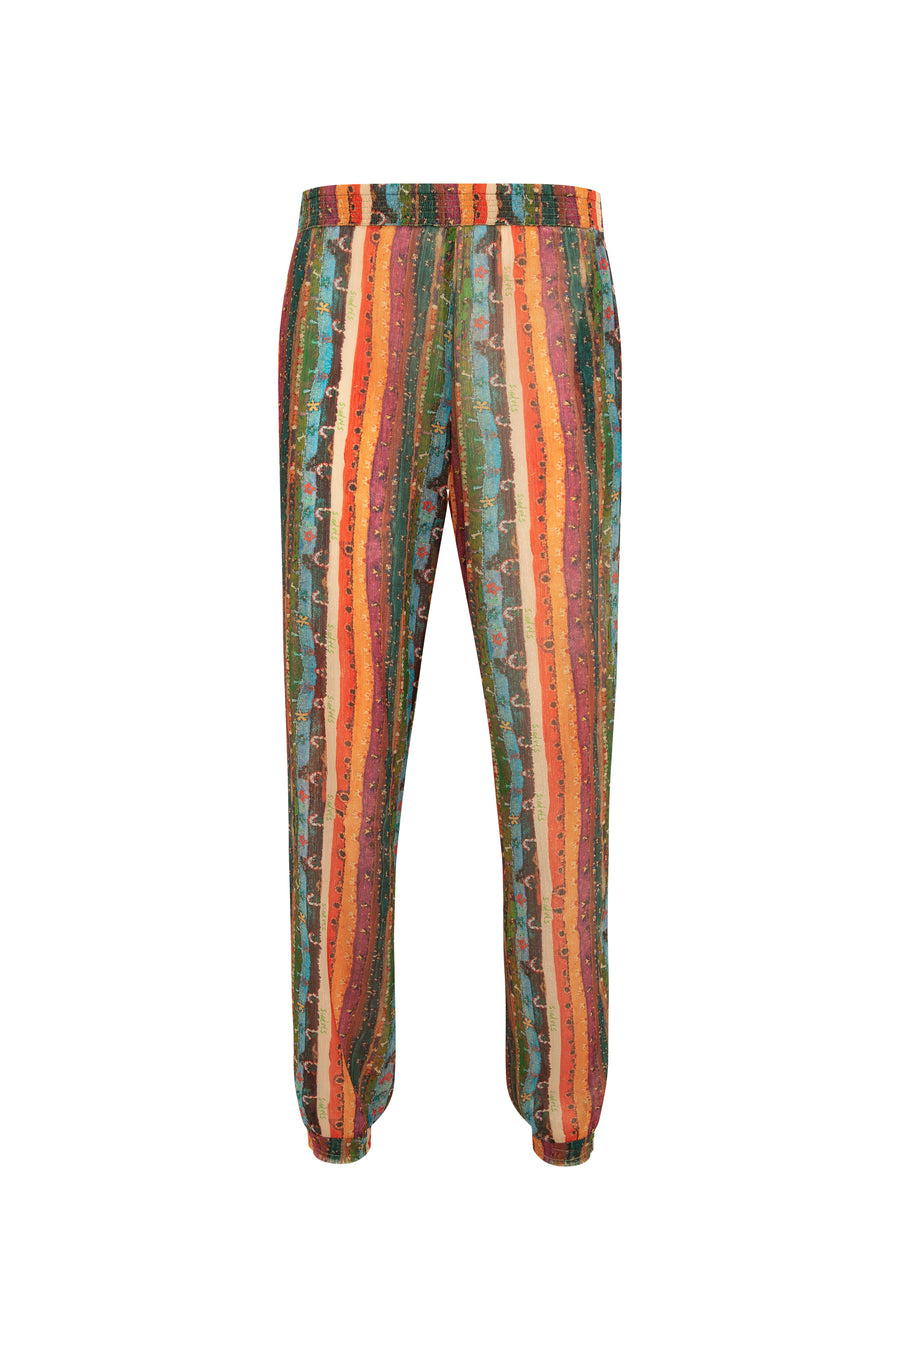 SHEN - Printed lumiere chiffon shalwar pants